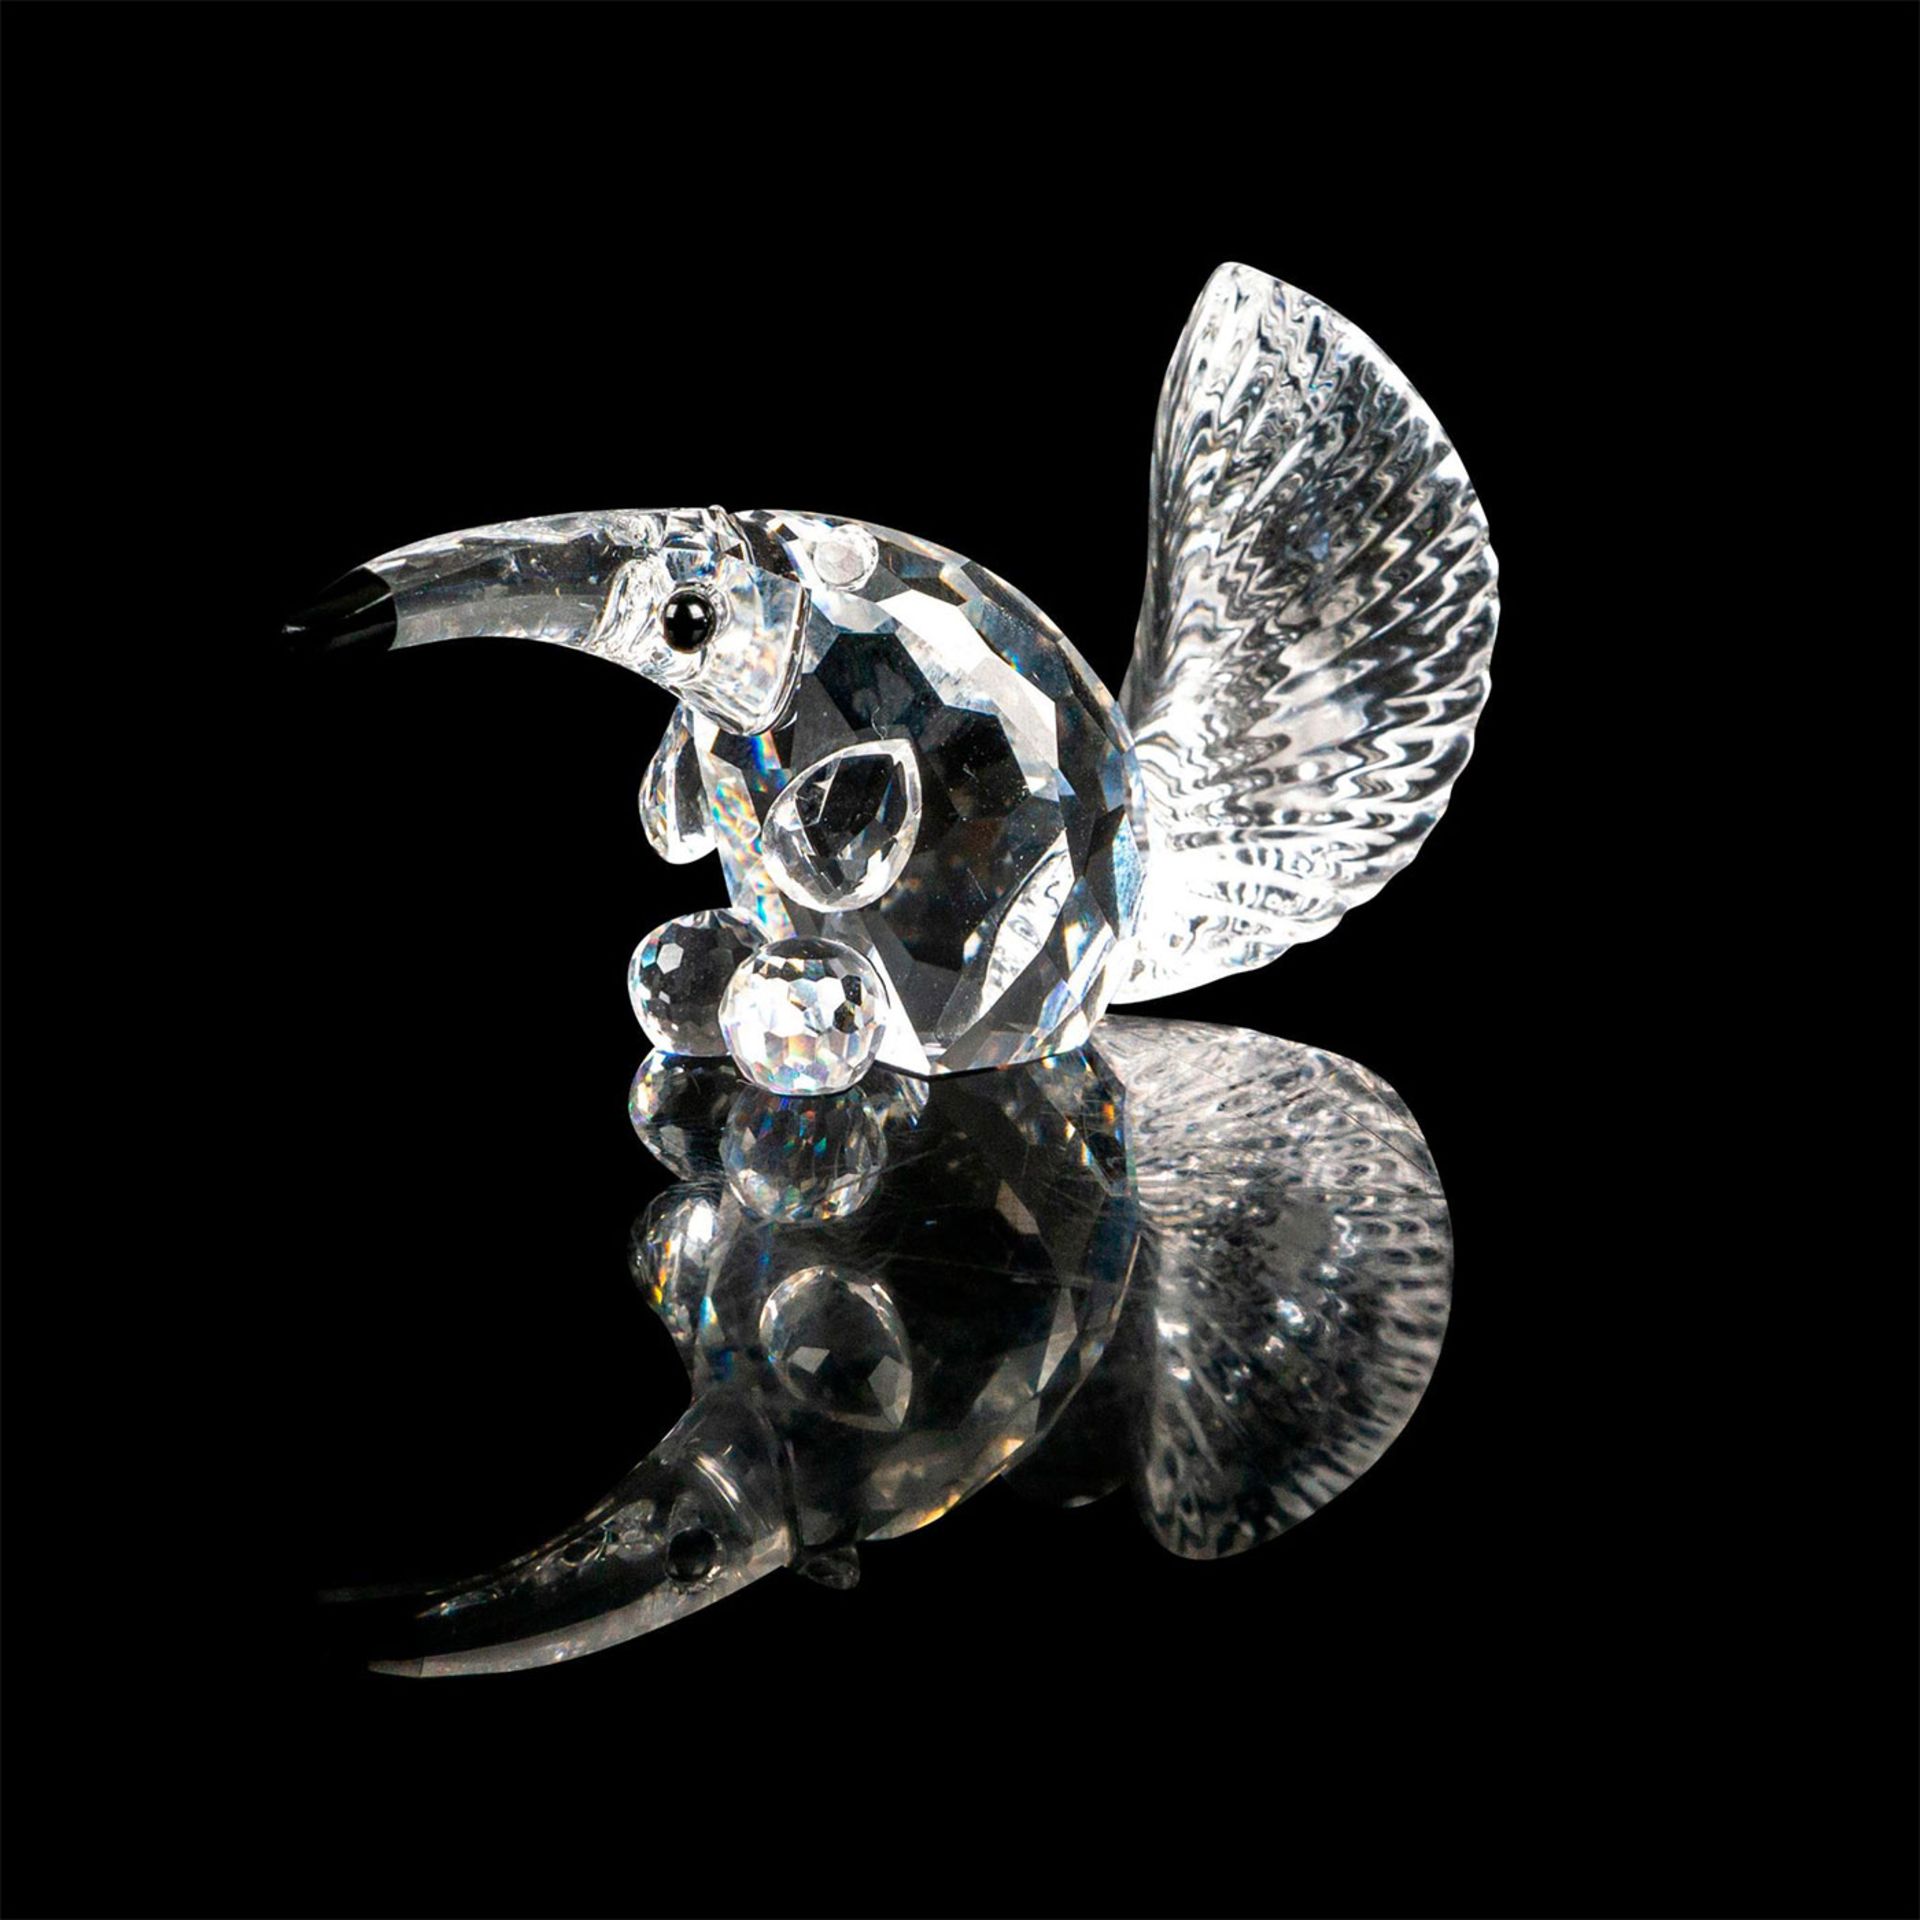 Swarovski Crystal Figurine, Anteater - Image 2 of 4